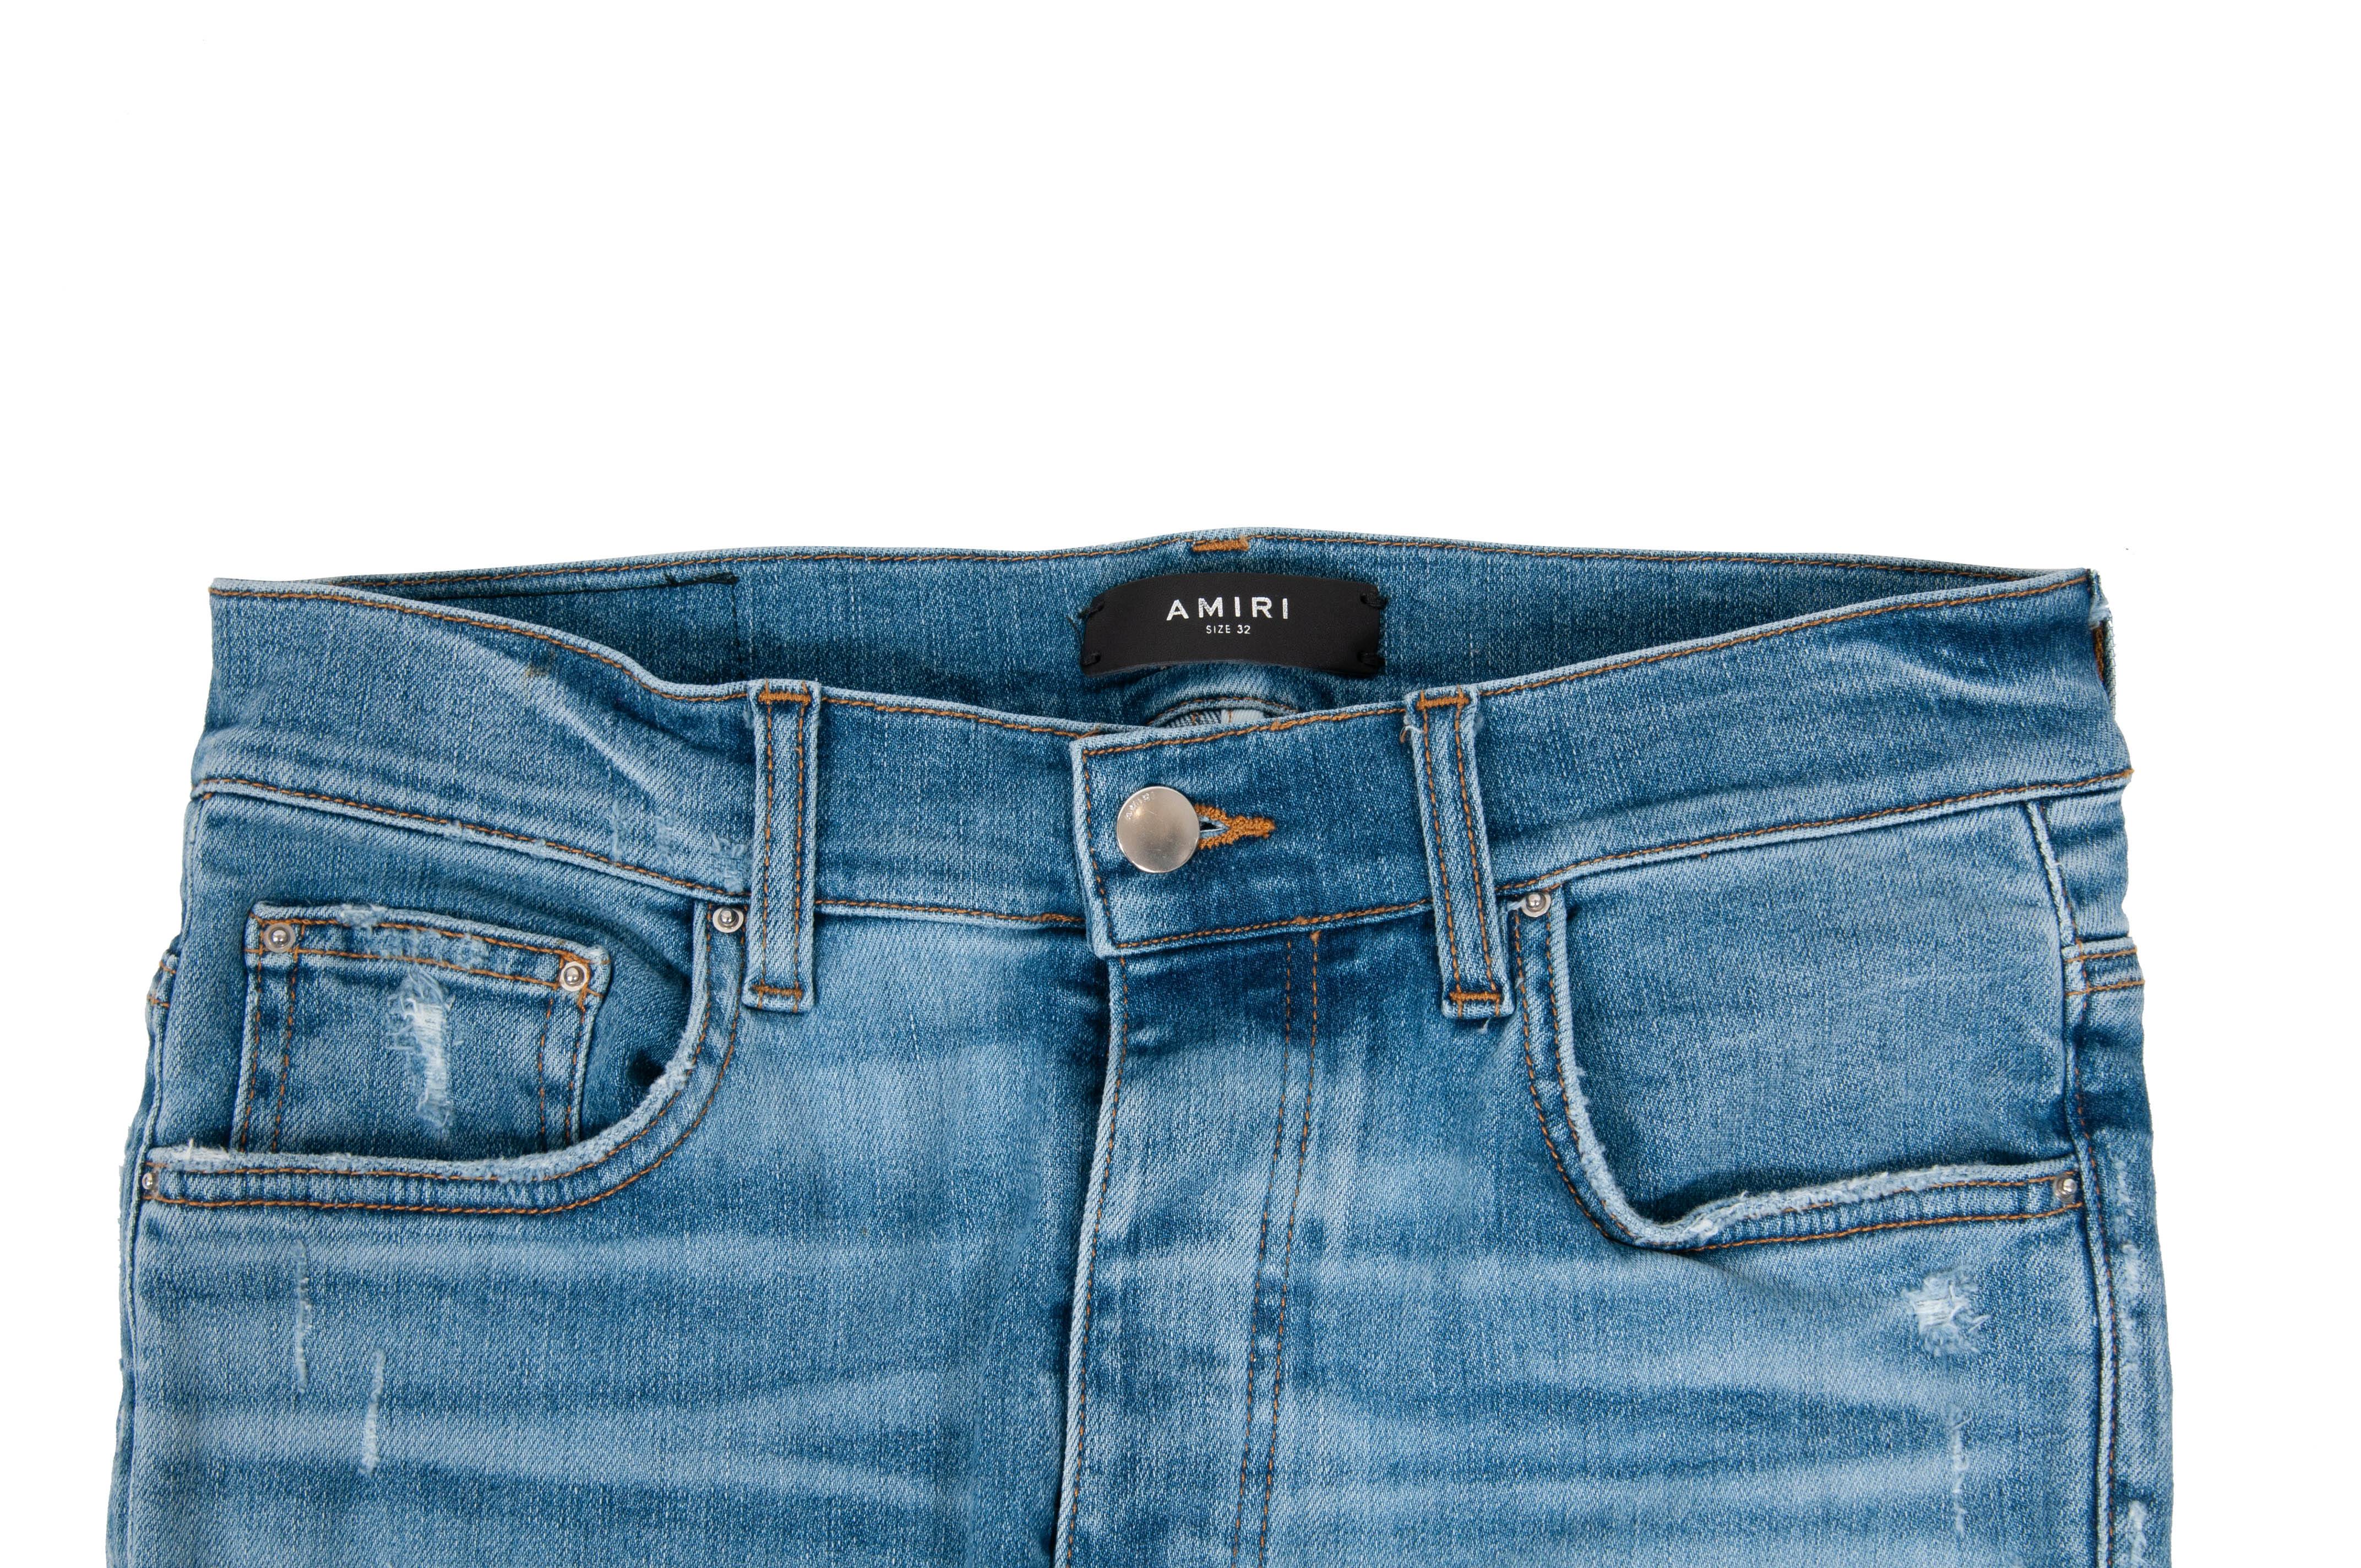 Kahlani Denim Patch Jeans - Small